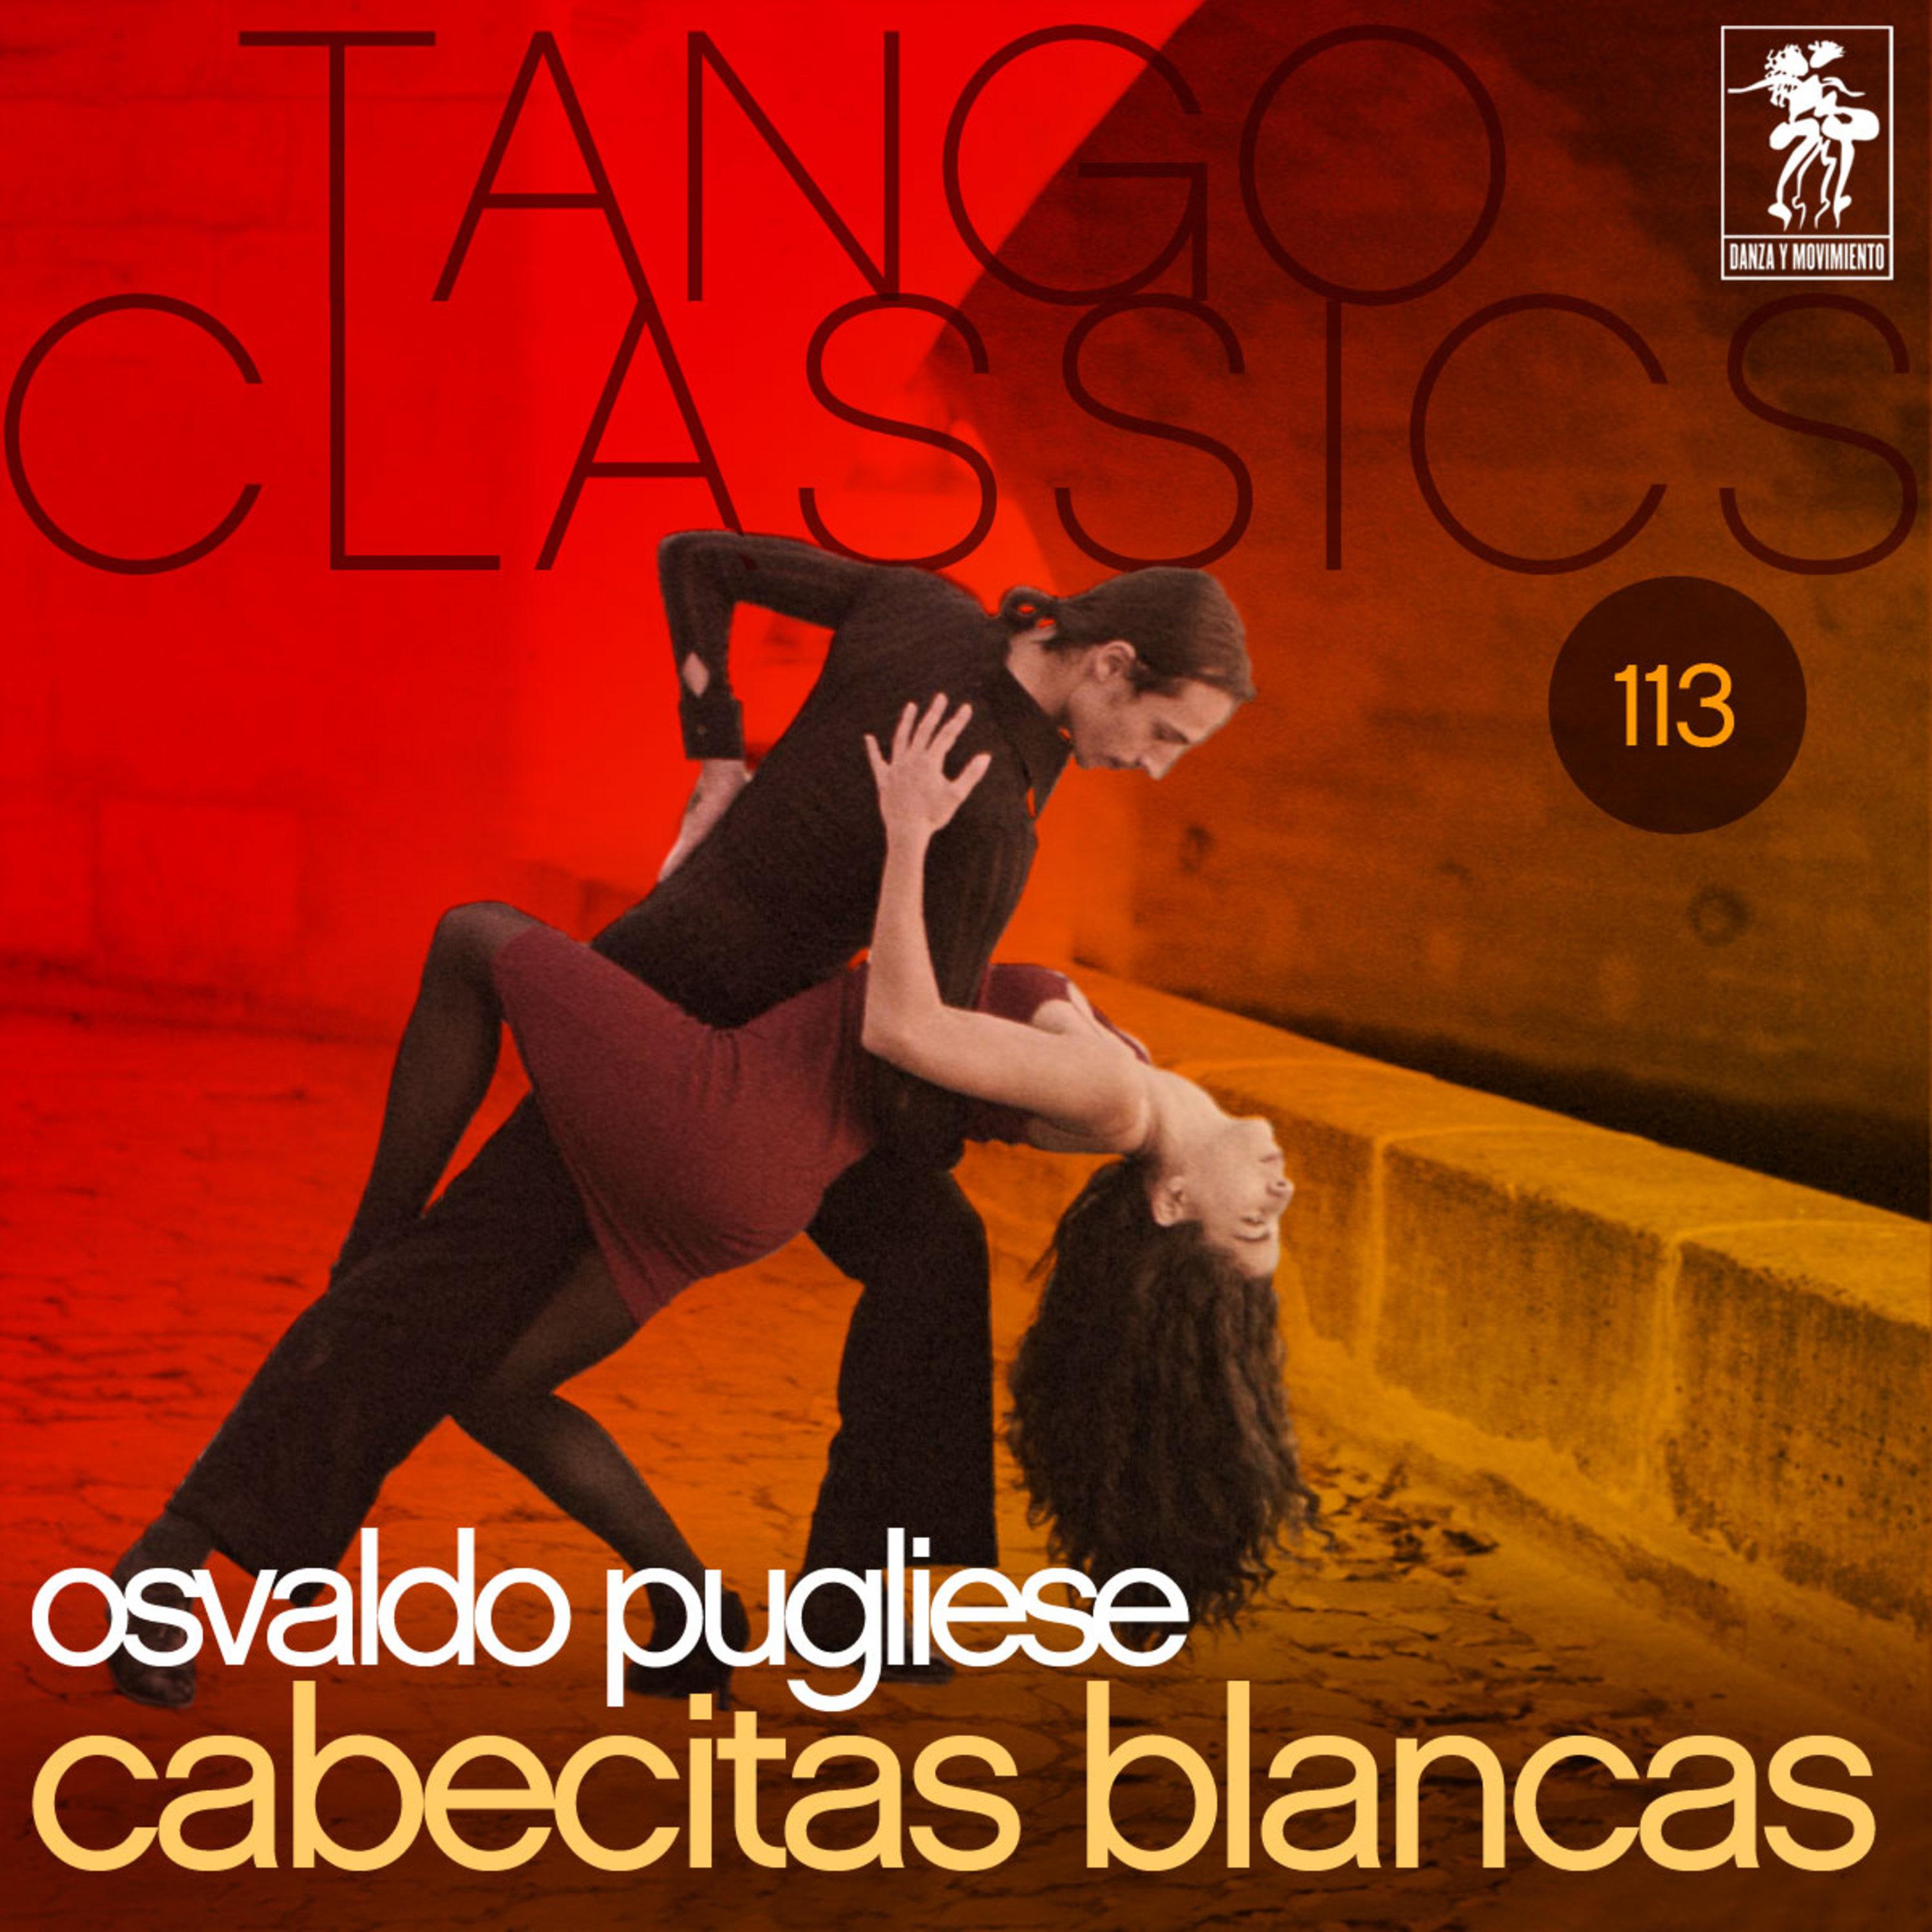 Tango Classics 113: Cabecitas blancas